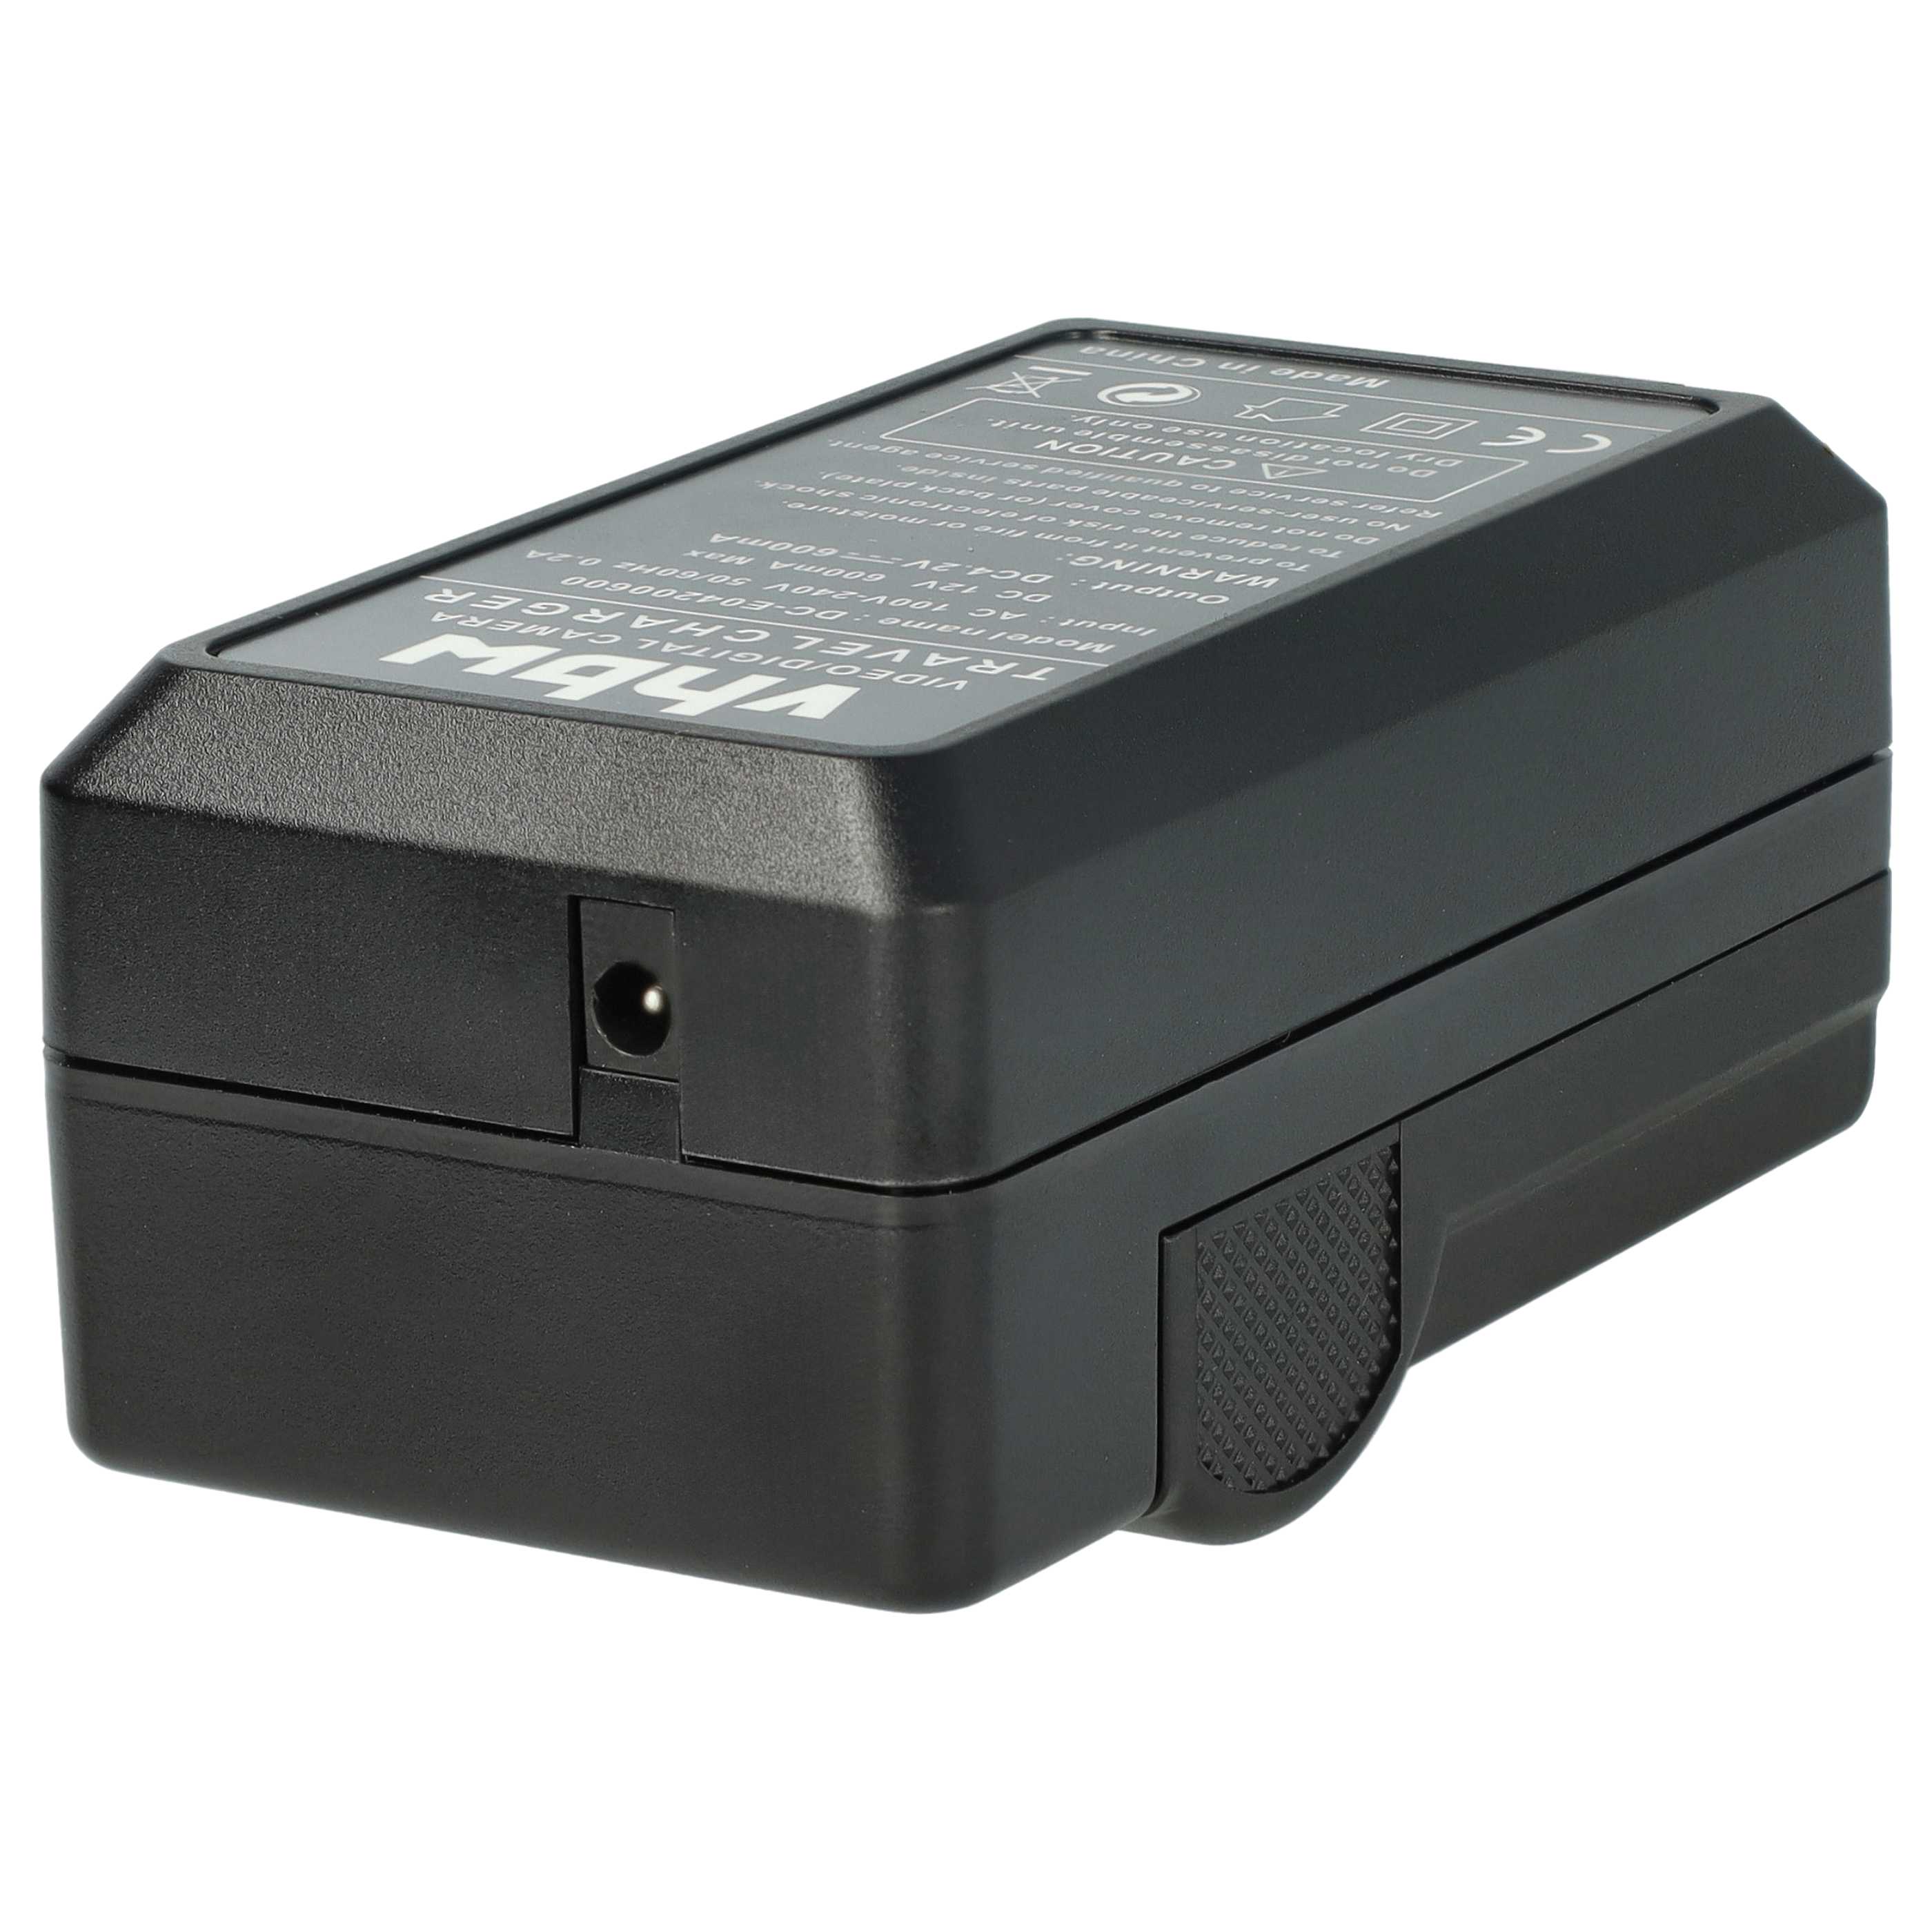 Akku Ladegerät als Ersatz für Canon CG-700 passend für Canon BP-709 Kamera u.a. - 0,6 A, 4,2 V